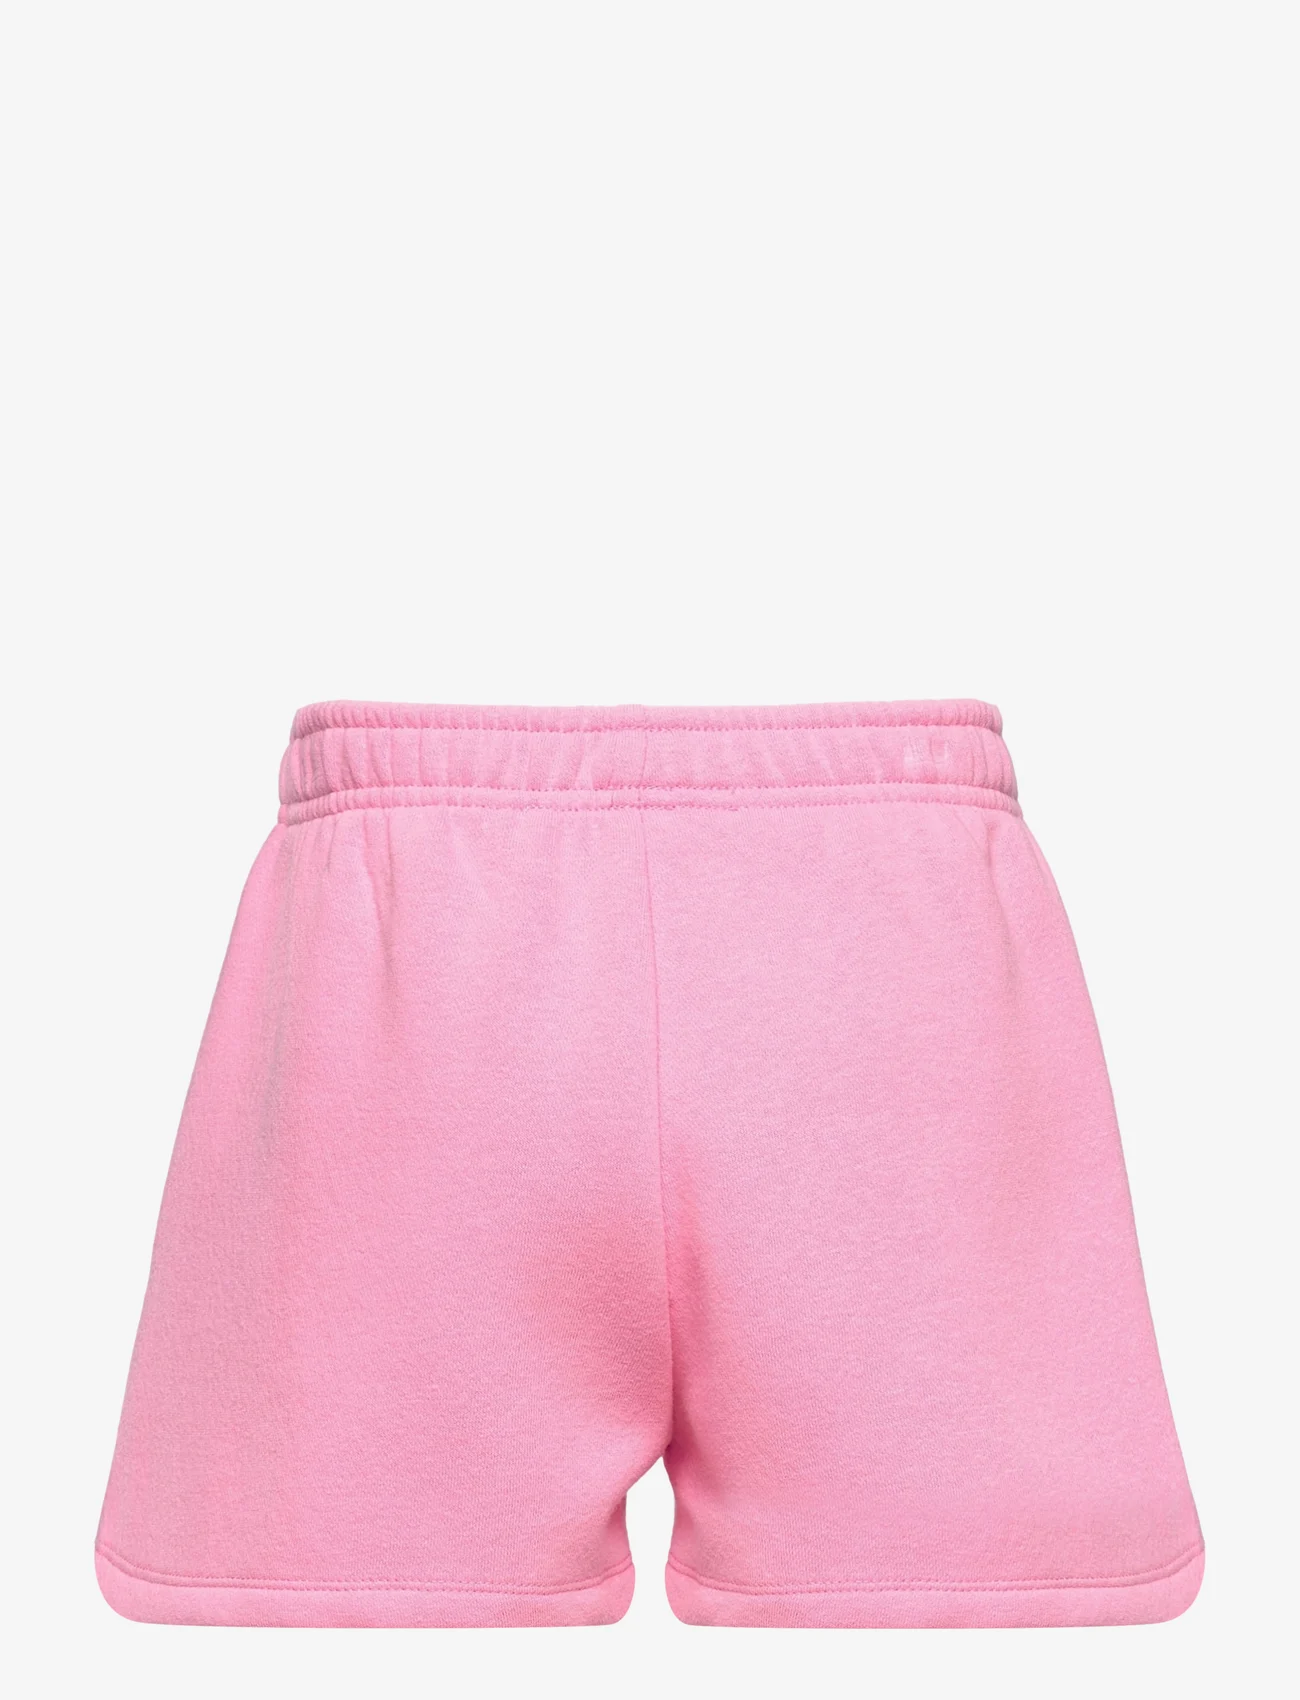 Rosemunde Kids - Shorts - sweatshorts - bubblegum pink - 1